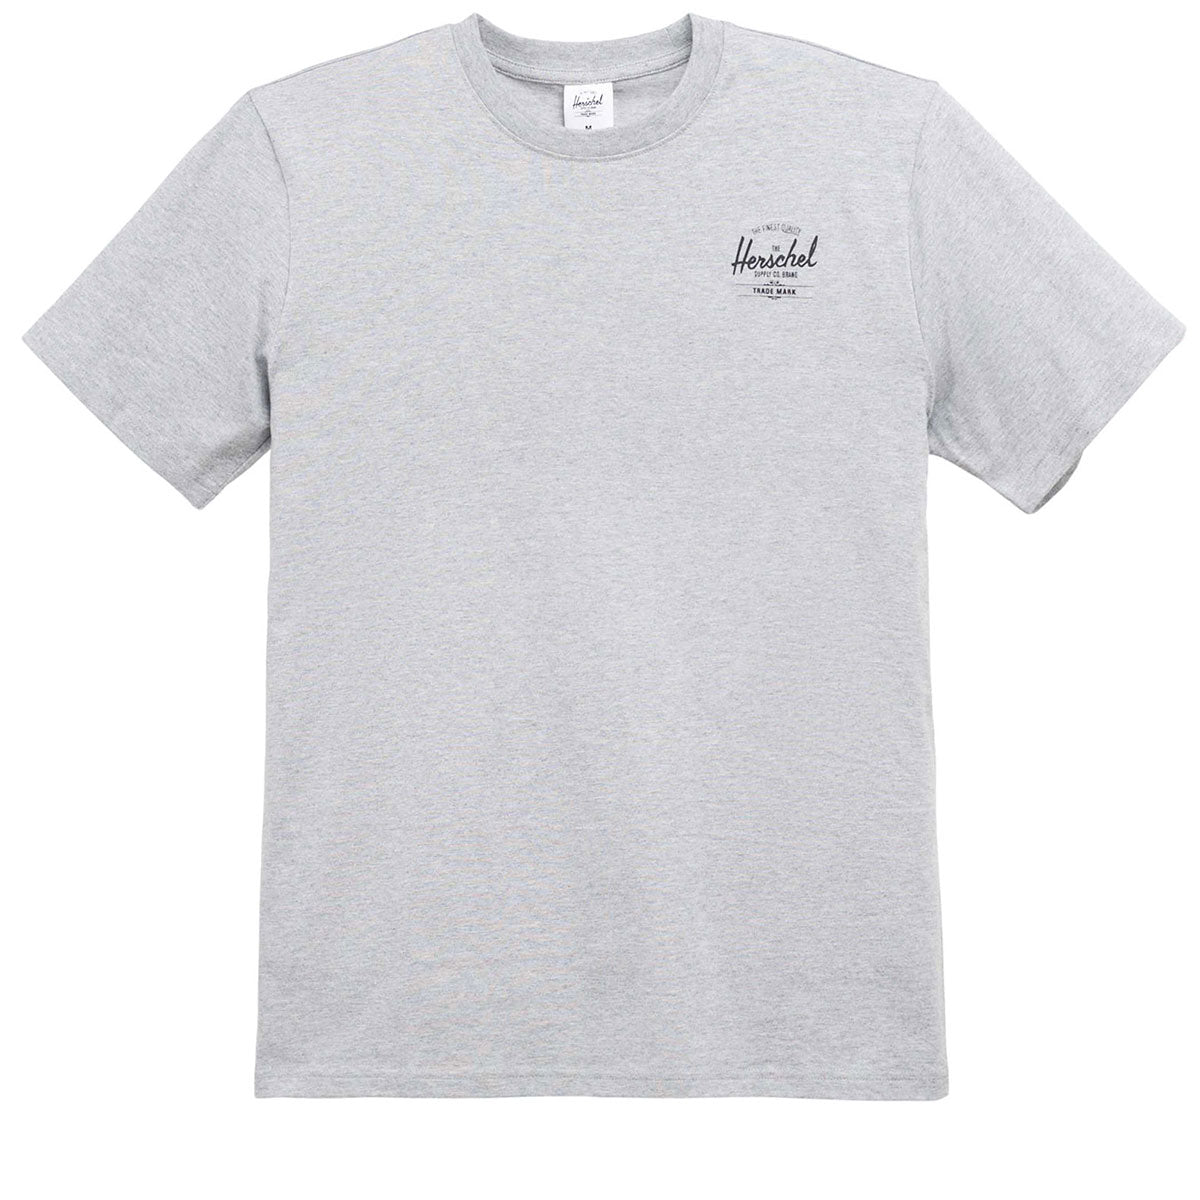 Herschel Supply Basic T-Shirt - Heather Light Grey/Black image 1